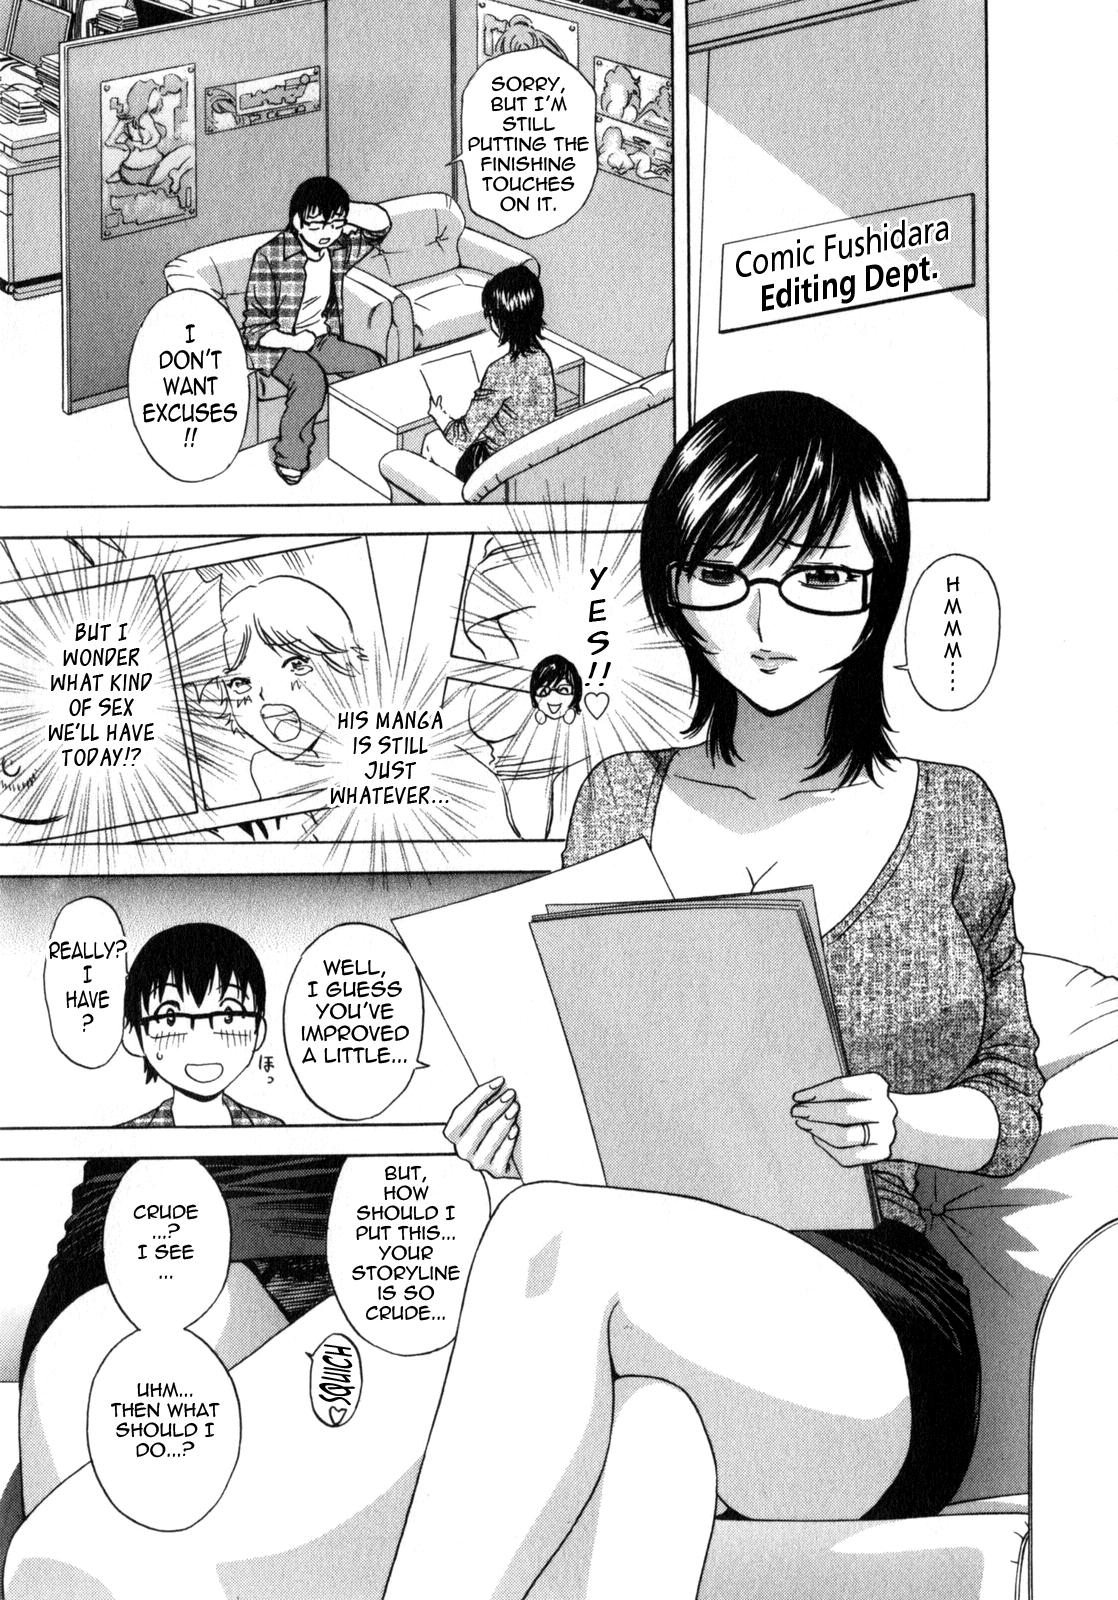 [Hidemaru] Life with Married Women Just Like a Manga 1 - Ch. 1-9 [English] {Tadanohito} 166